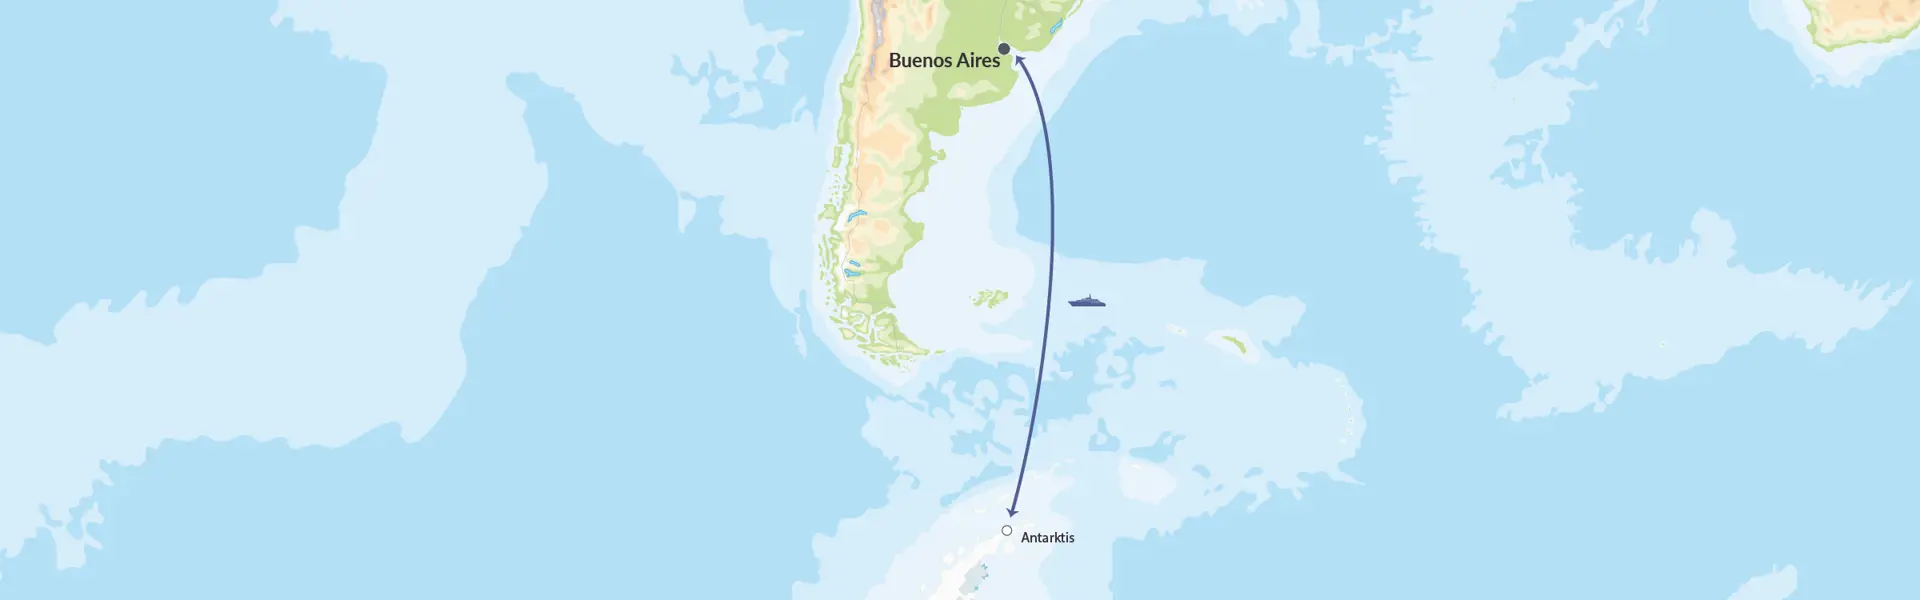 DK Hurtigruten Antarktis Map